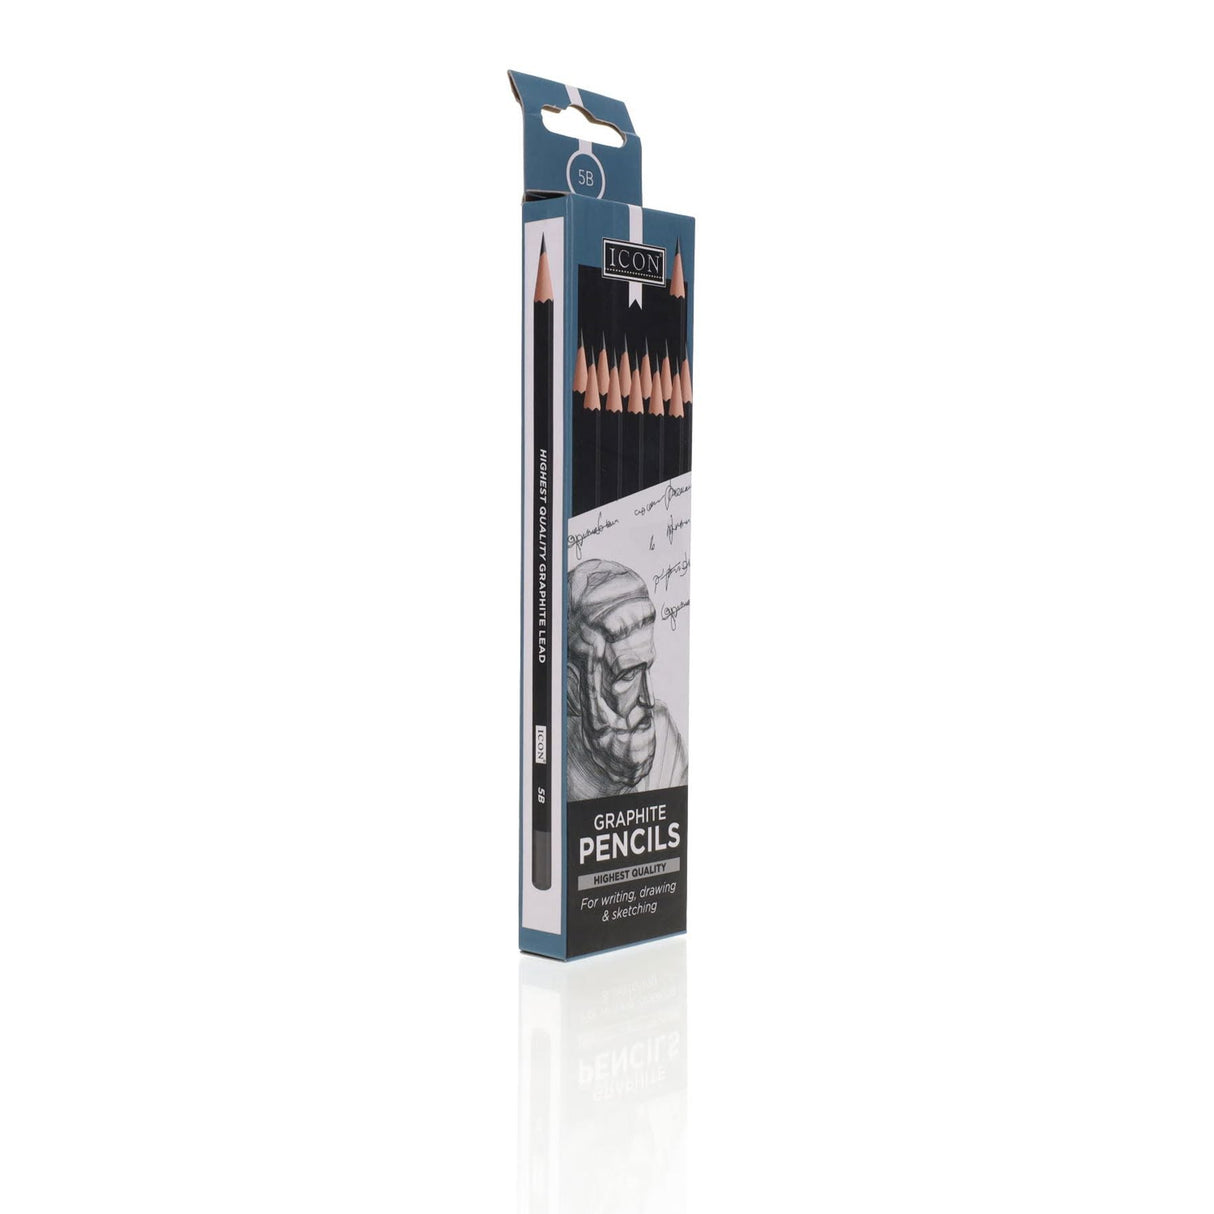 Icon Graphite Pencils - 5B - Box of 12 | Stationery Shop UK